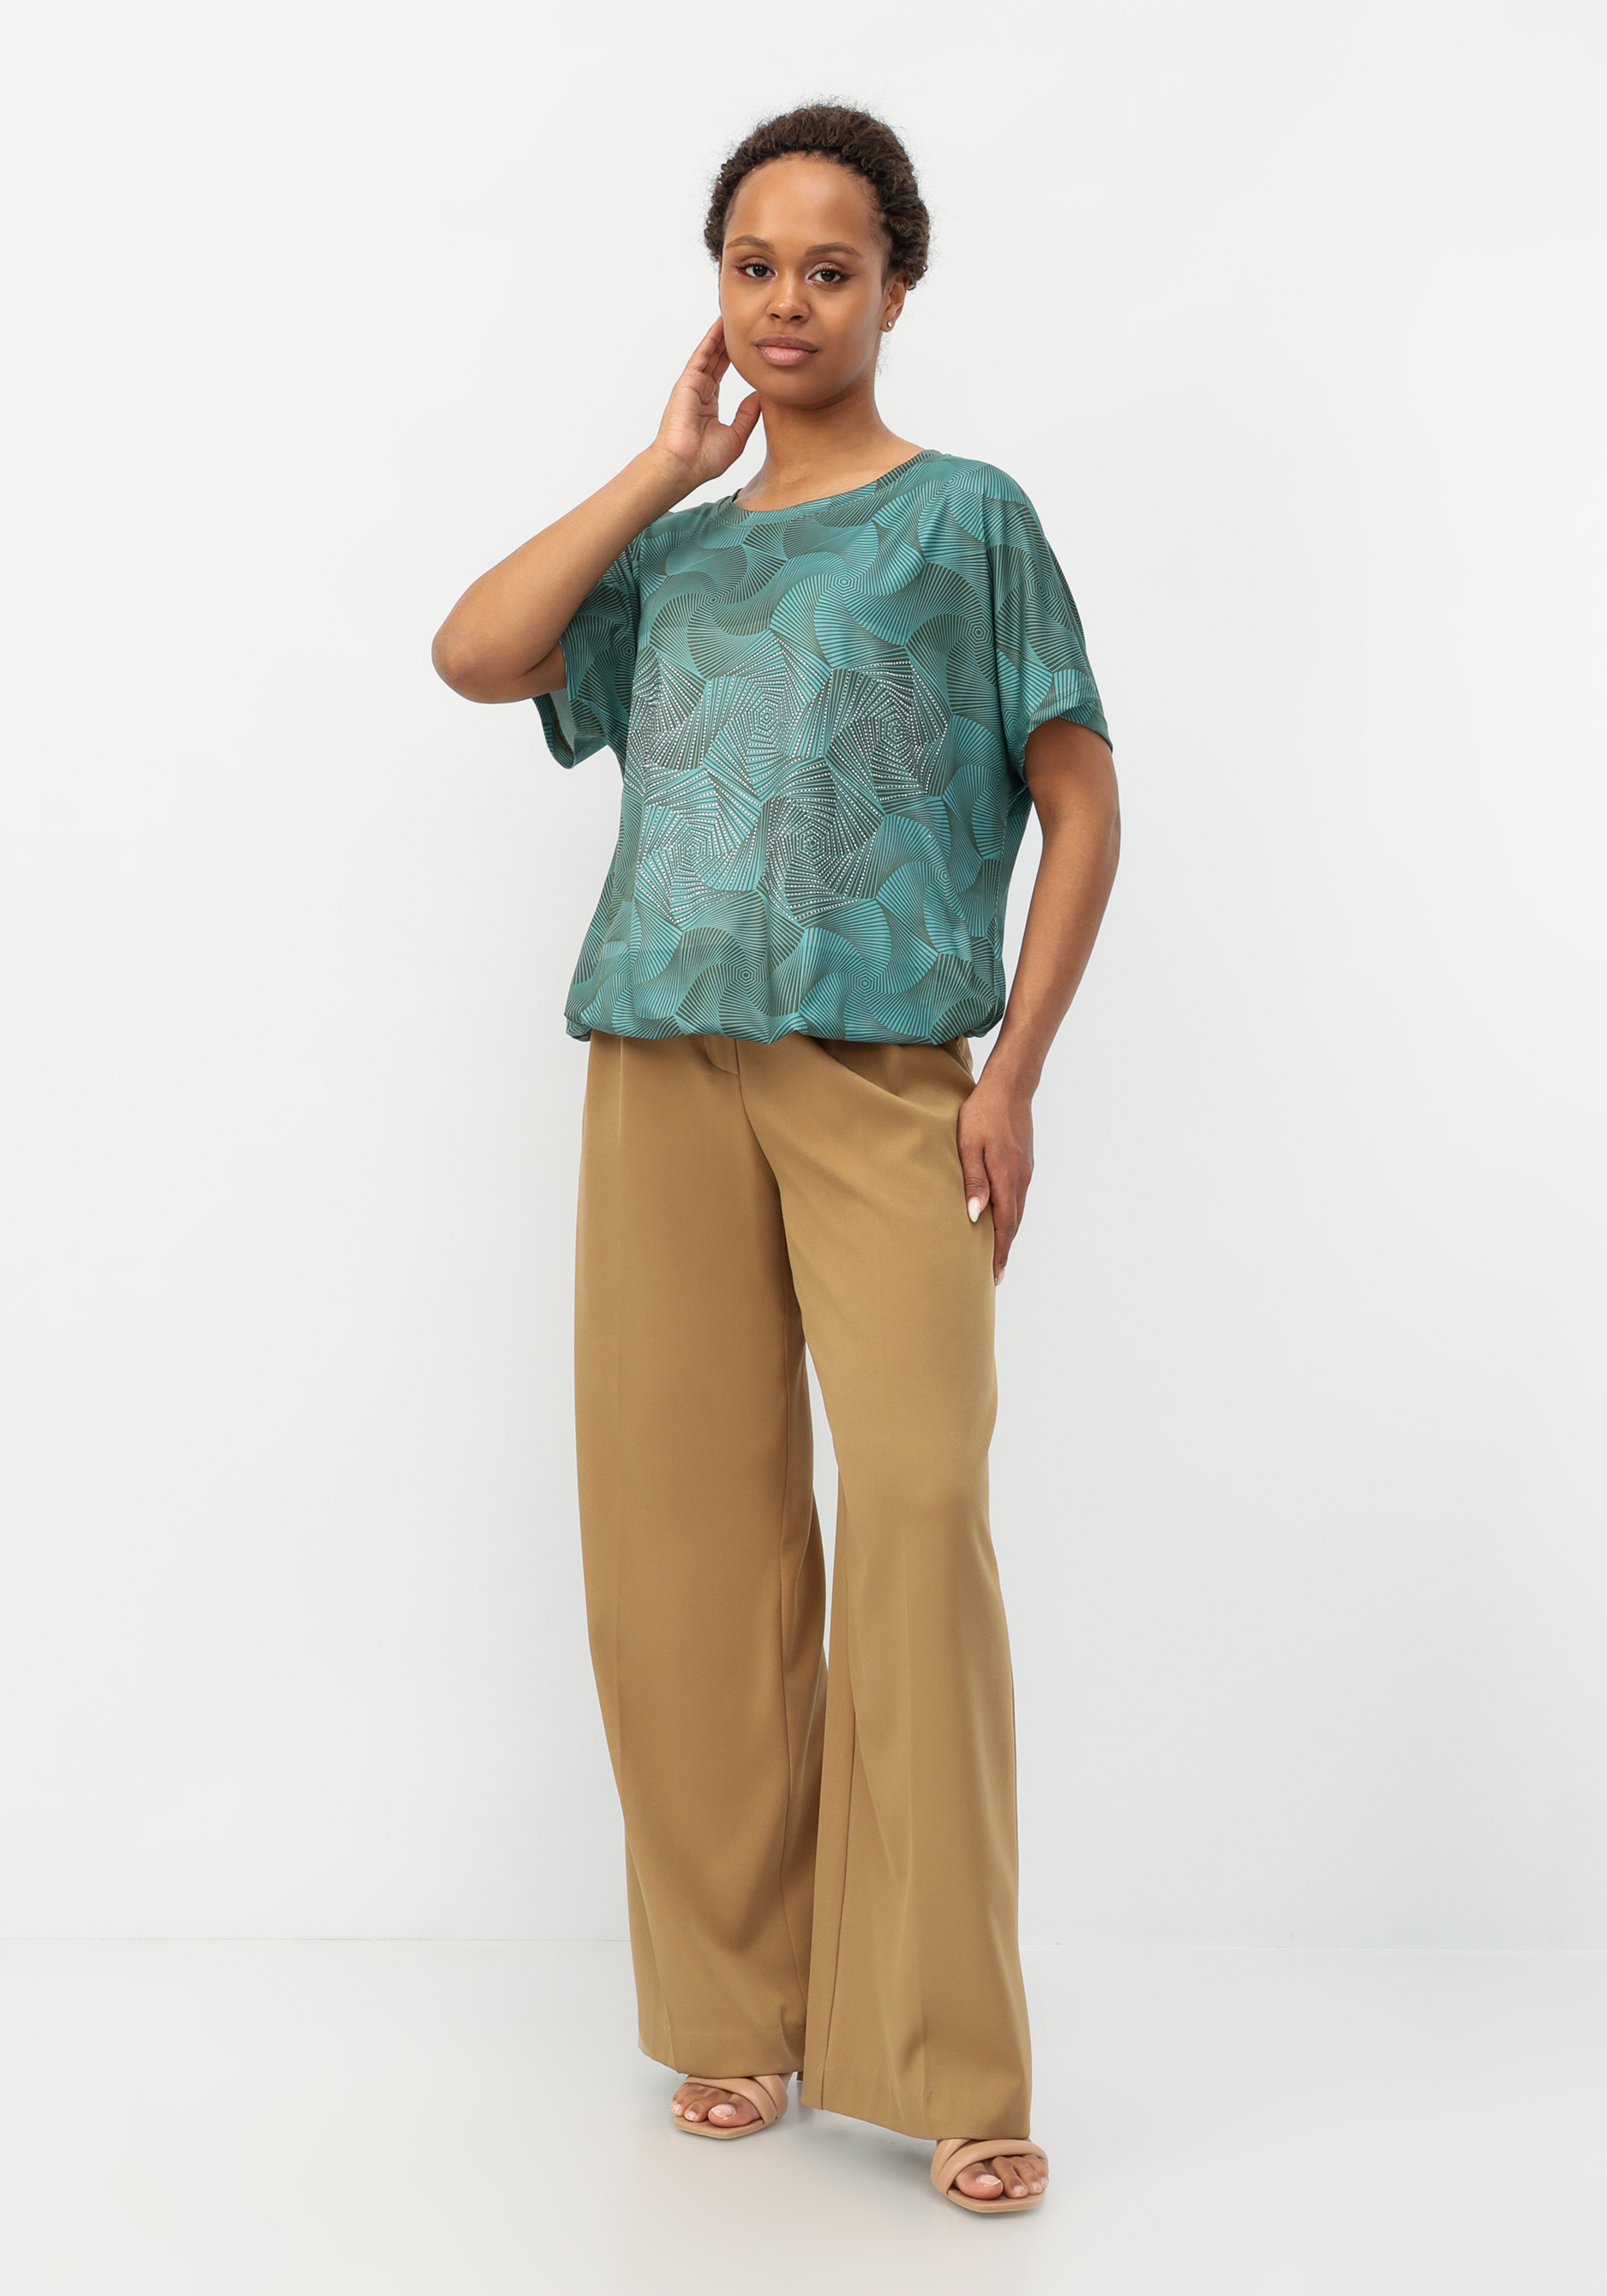 Блуза со стразами и принтом No name, размер 56-58, цвет зеленый - фото 2